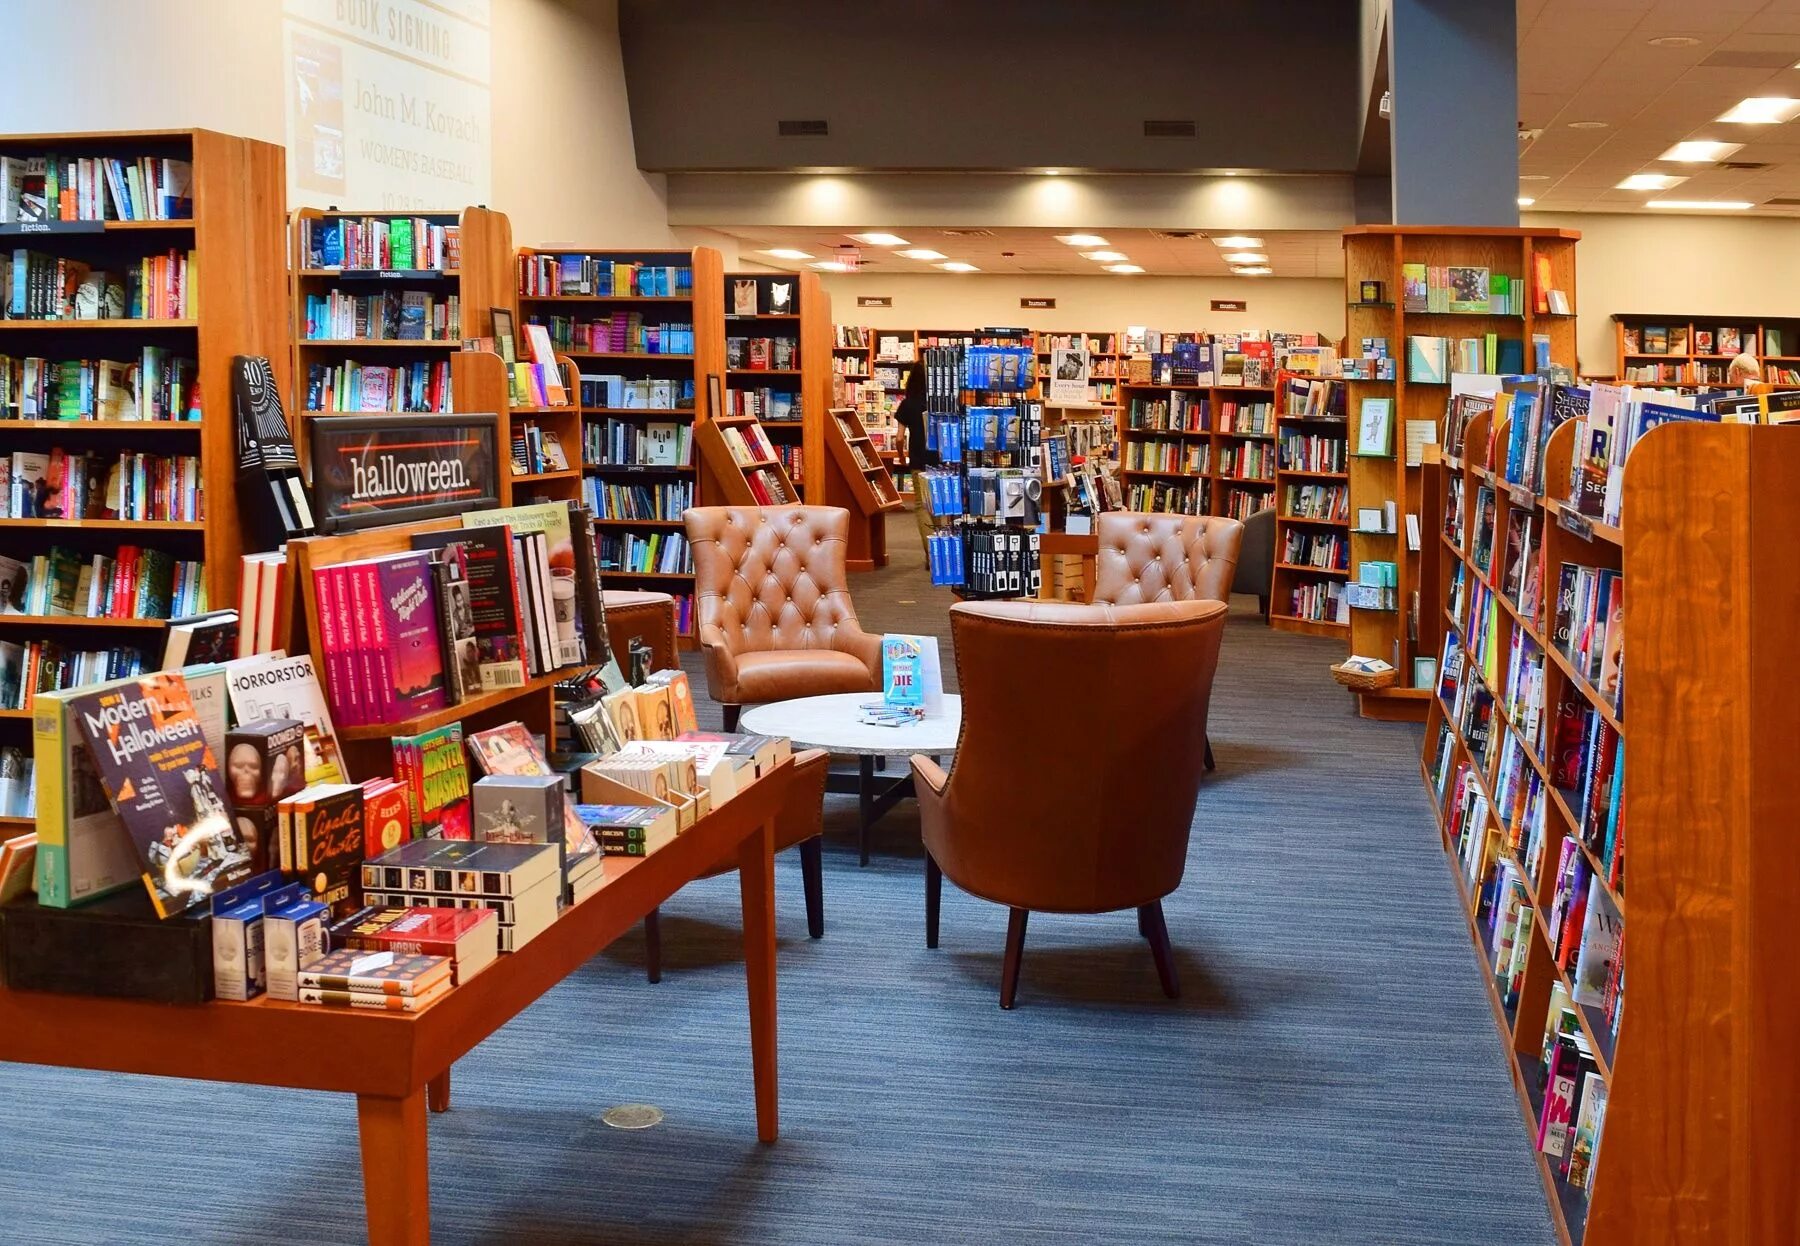 My book library. Книжный магазин. Красивый книжный магазин. Bookshop книжный магазин. Книжный магазин внутри.